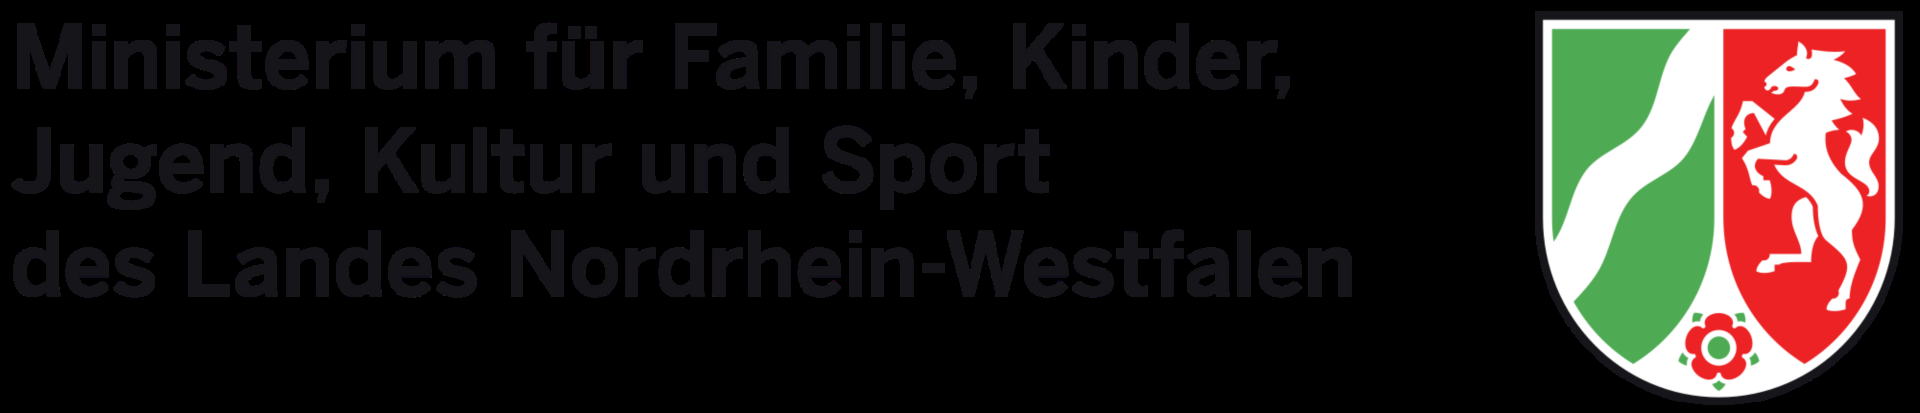 Logo_Ministerium_für_Familie,_Kinder,_Jugend,_Kultur_und_Sport_des_Landes_Nordrhein-Westfalen.svg